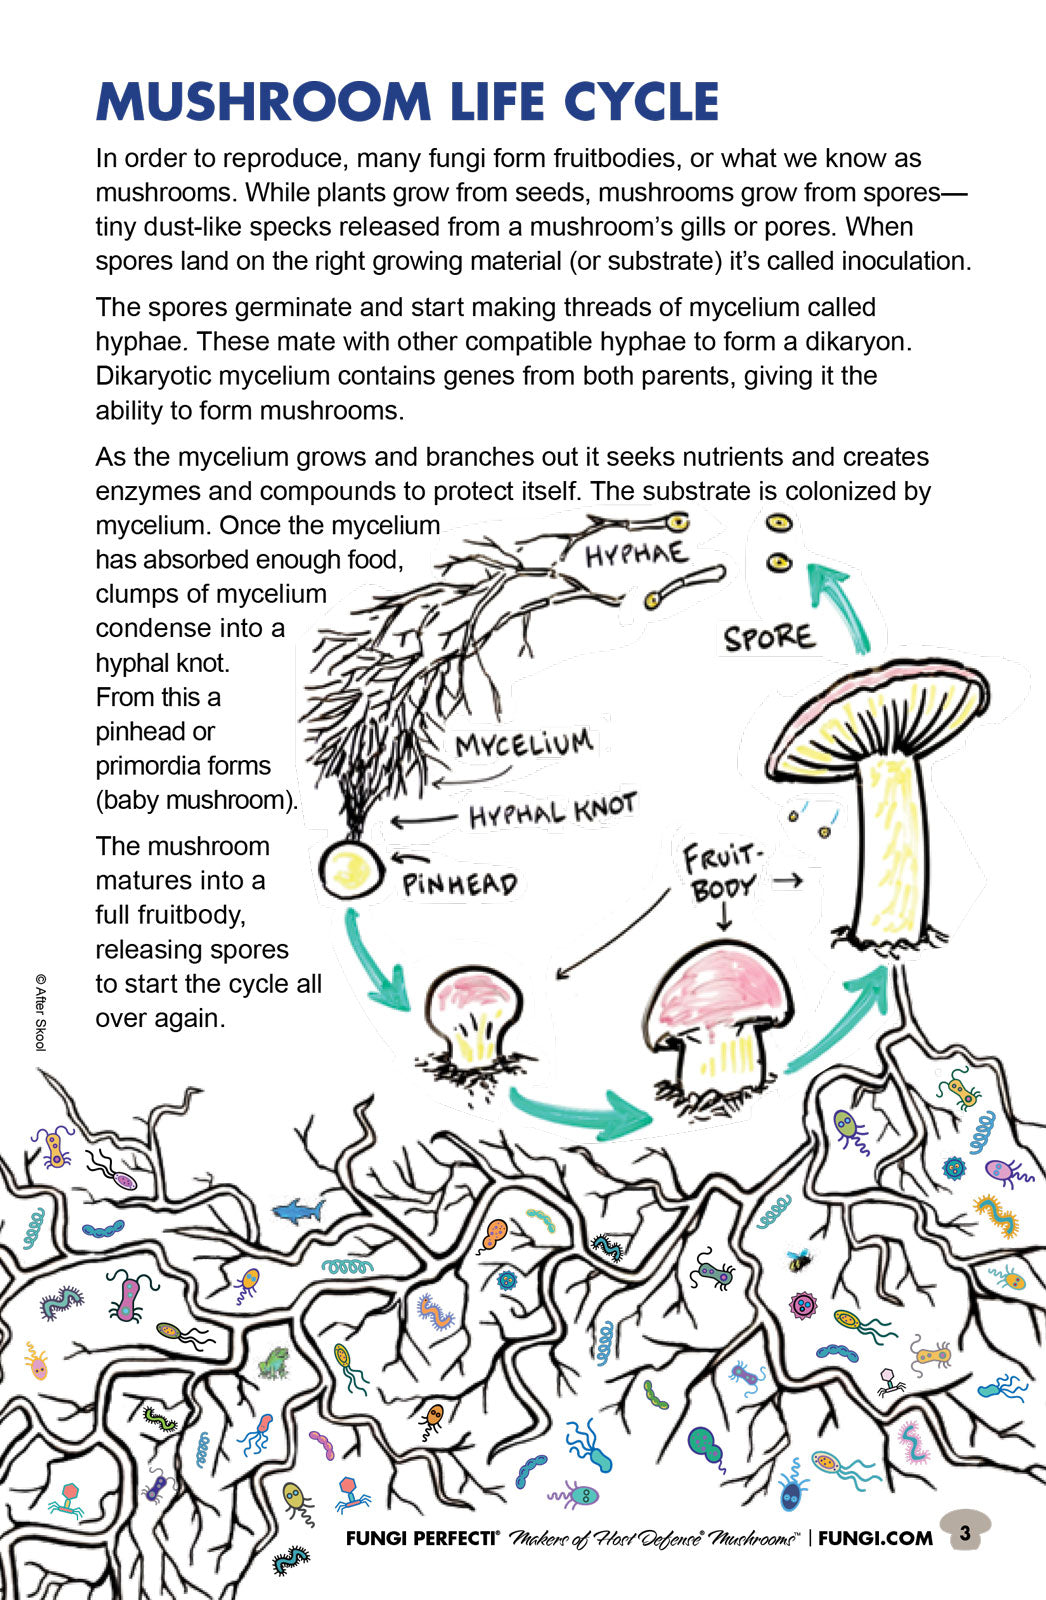 Fungi Perfecti Mushroom Funtime Activity Book